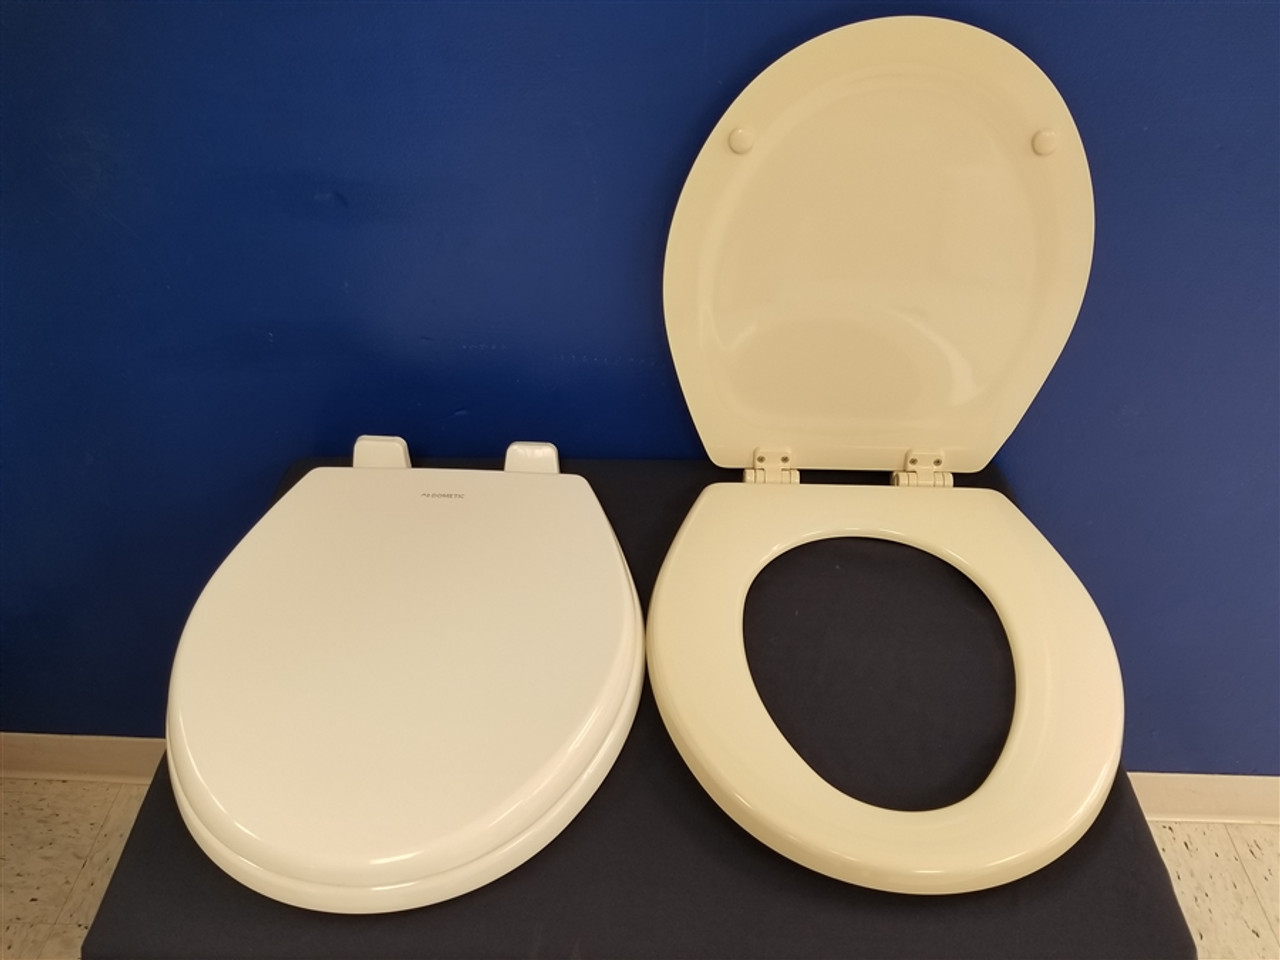 oblong soft toilet seat